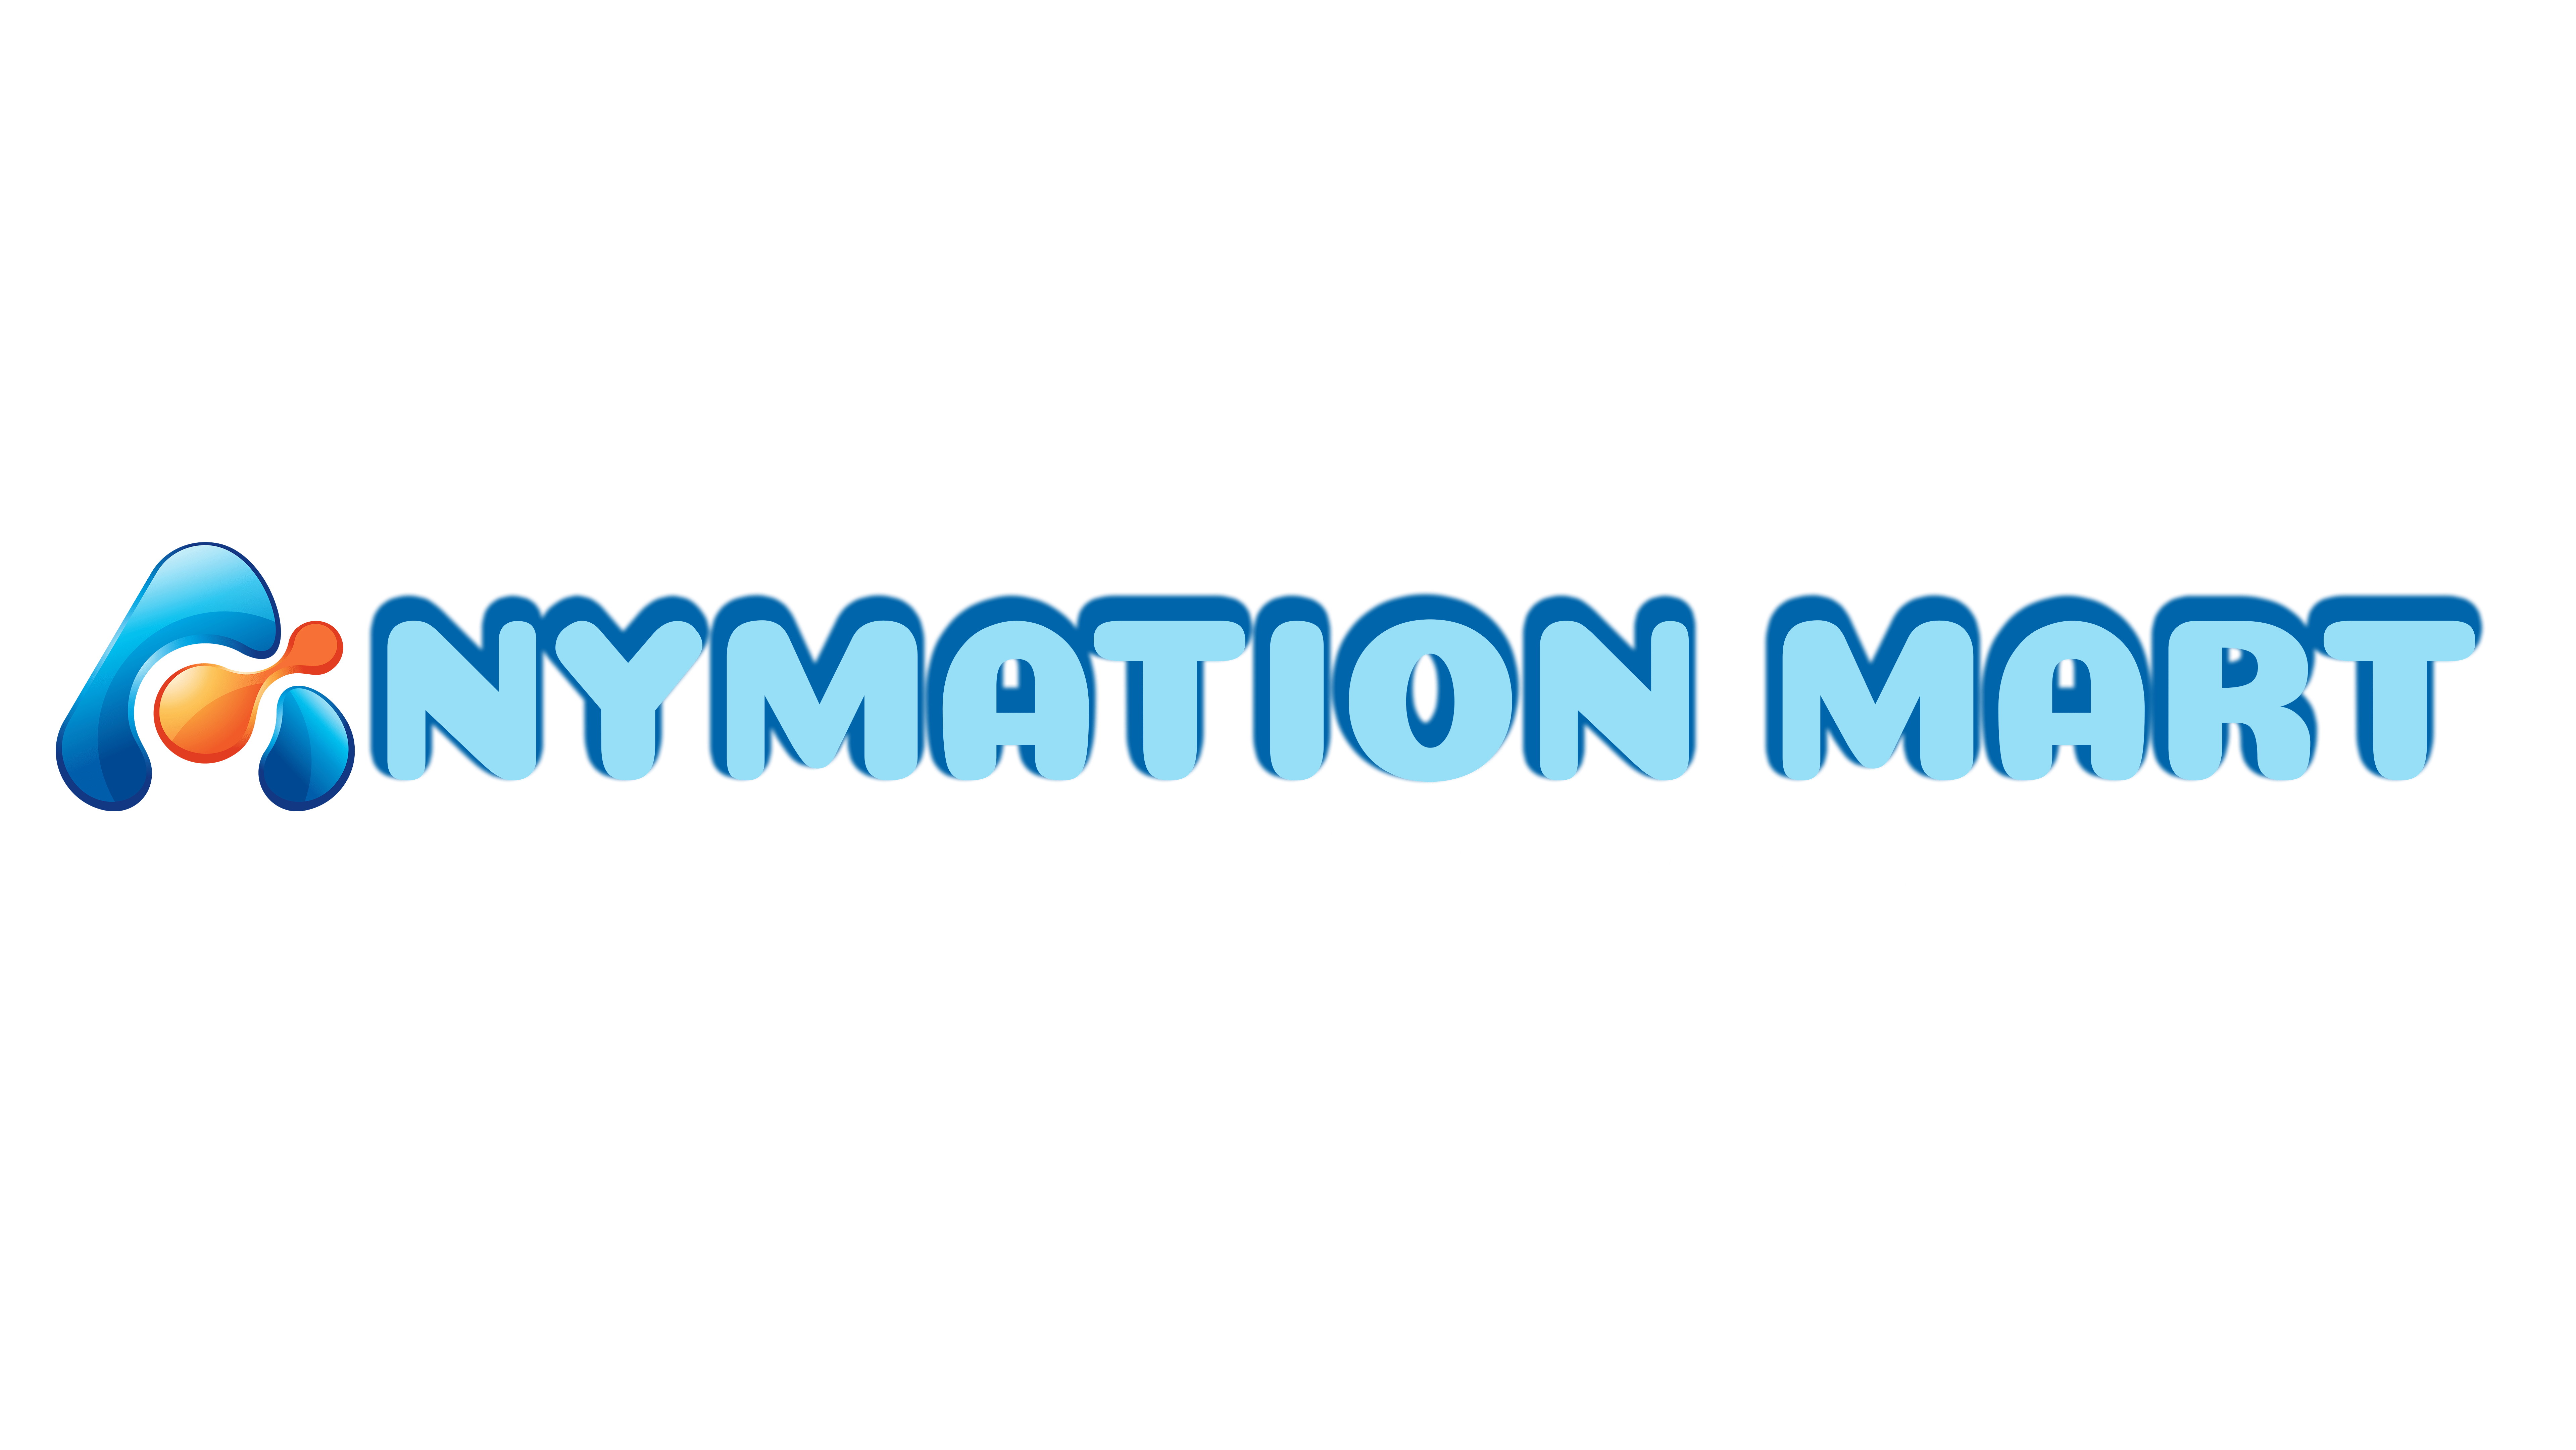 anymationmart.com